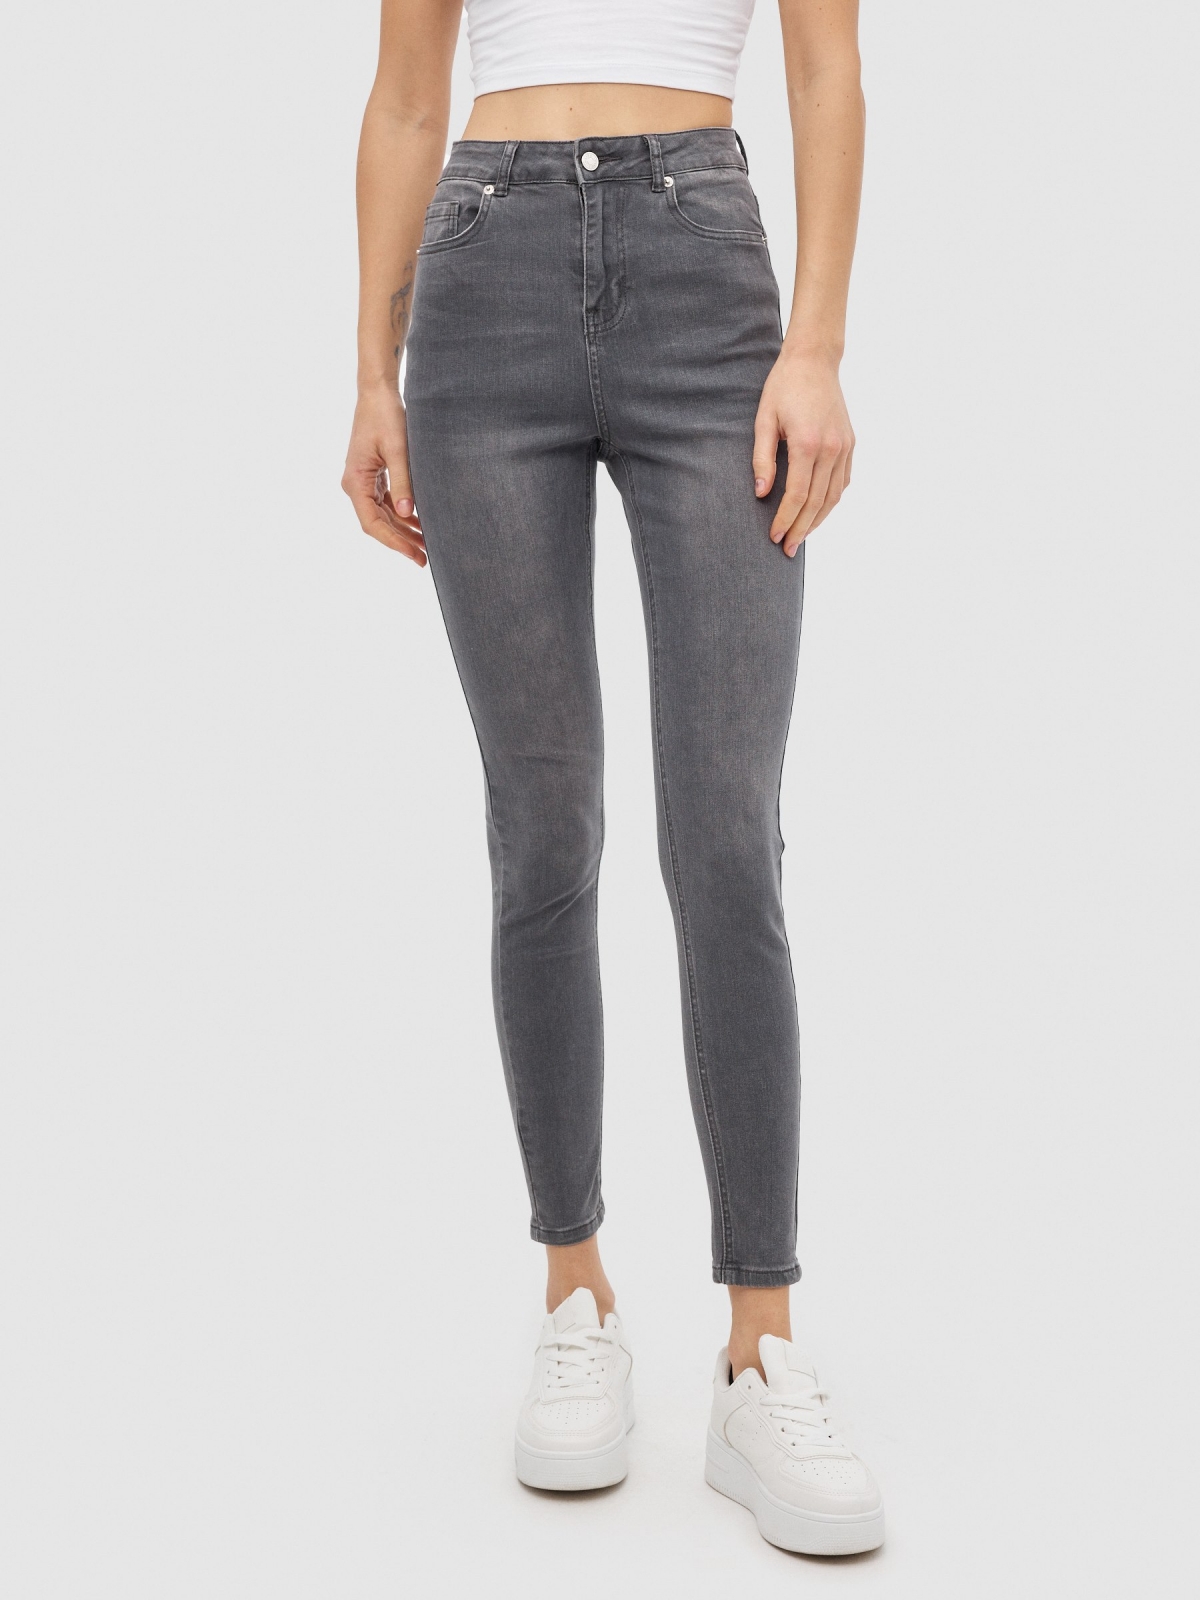 Jeans tiro medio gris desgastados gris claro vista media frontal